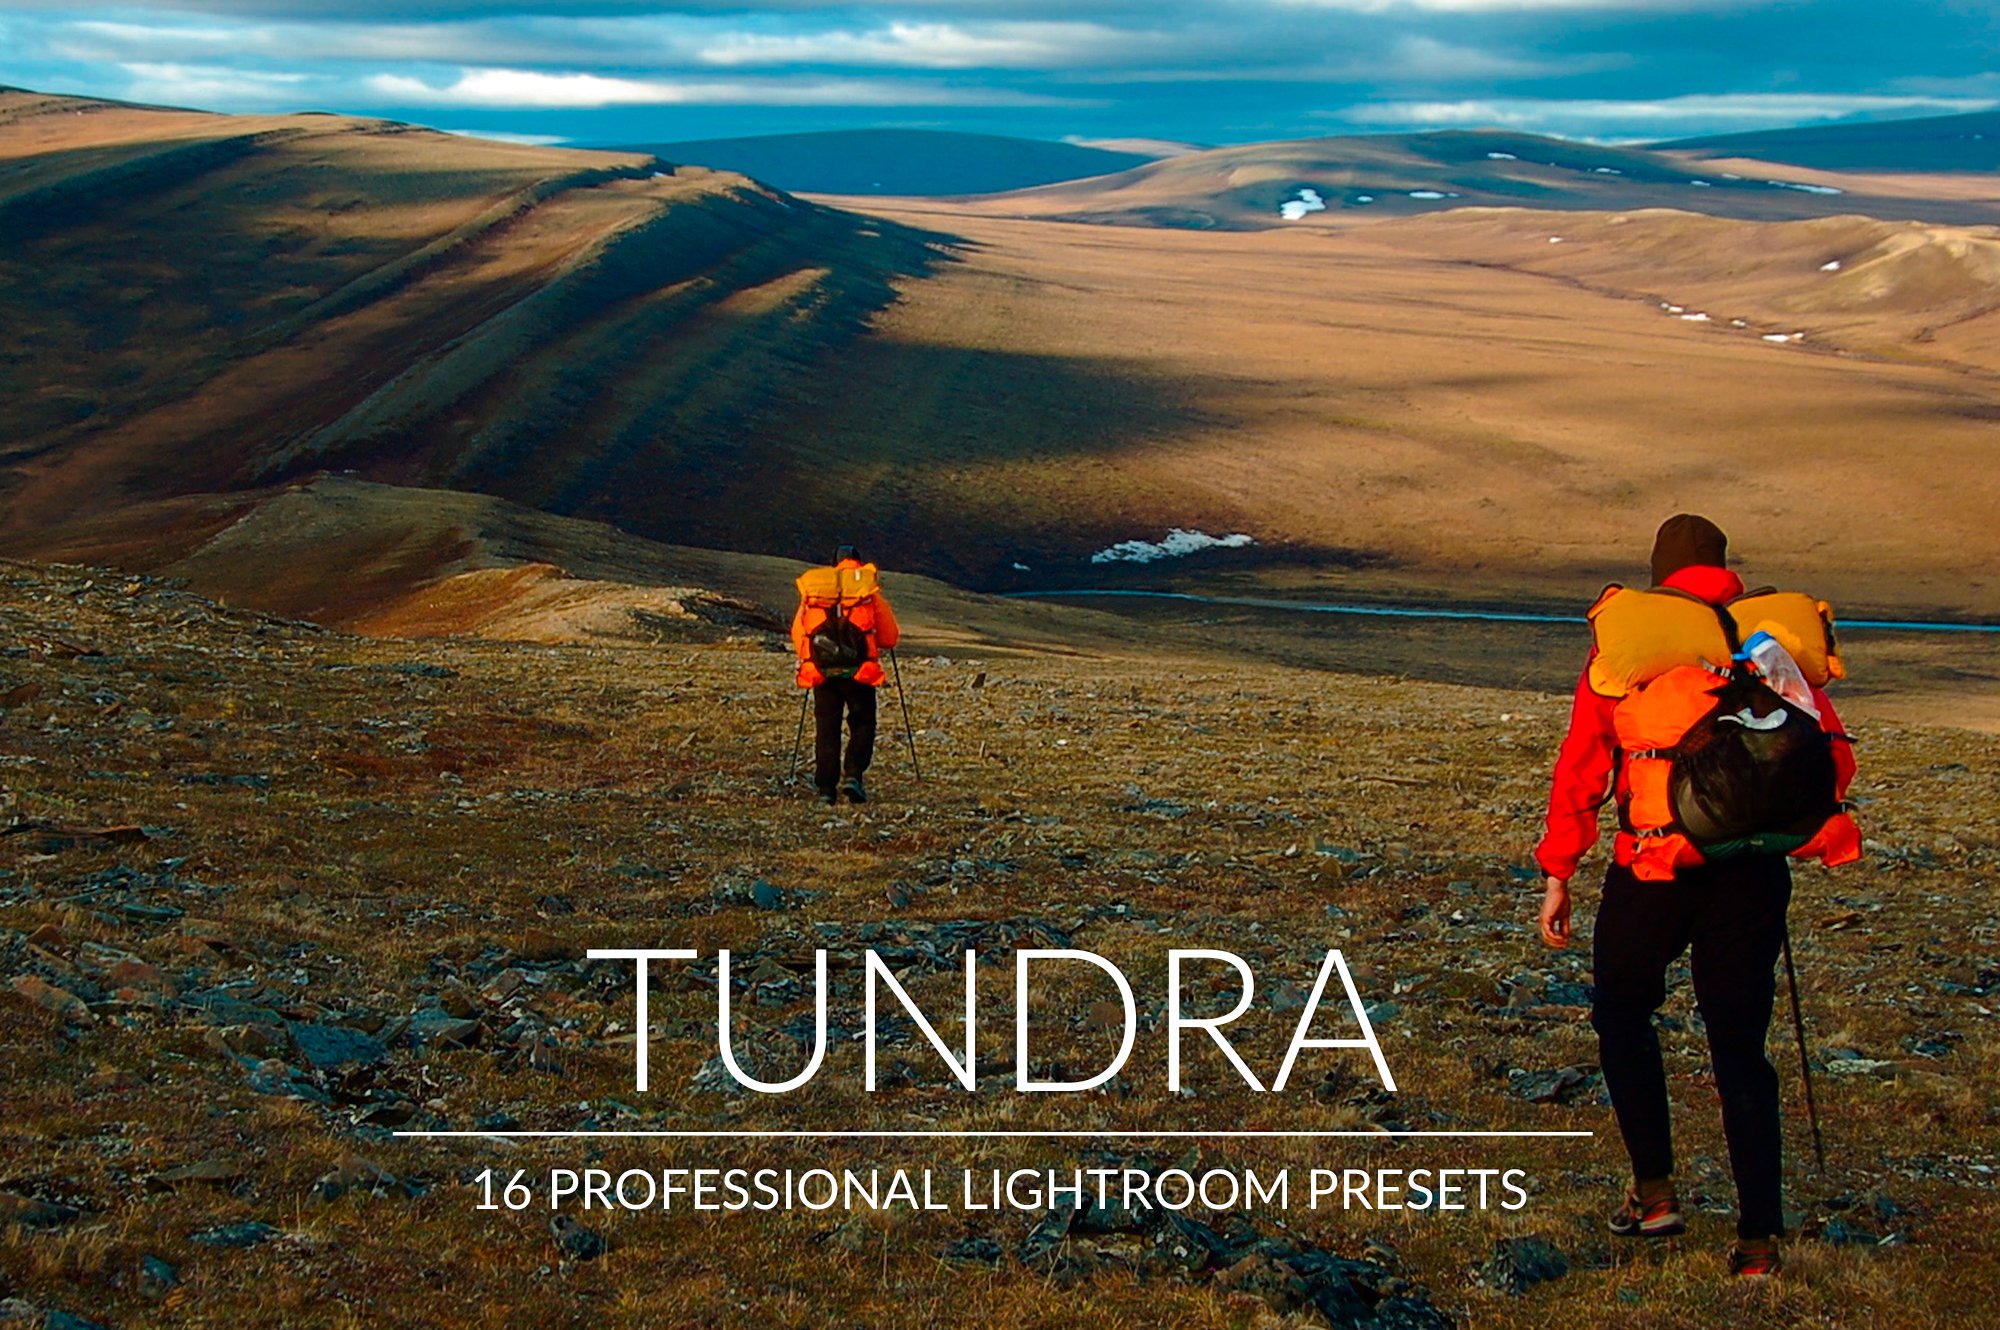 Tundra Lr Presetscover image.